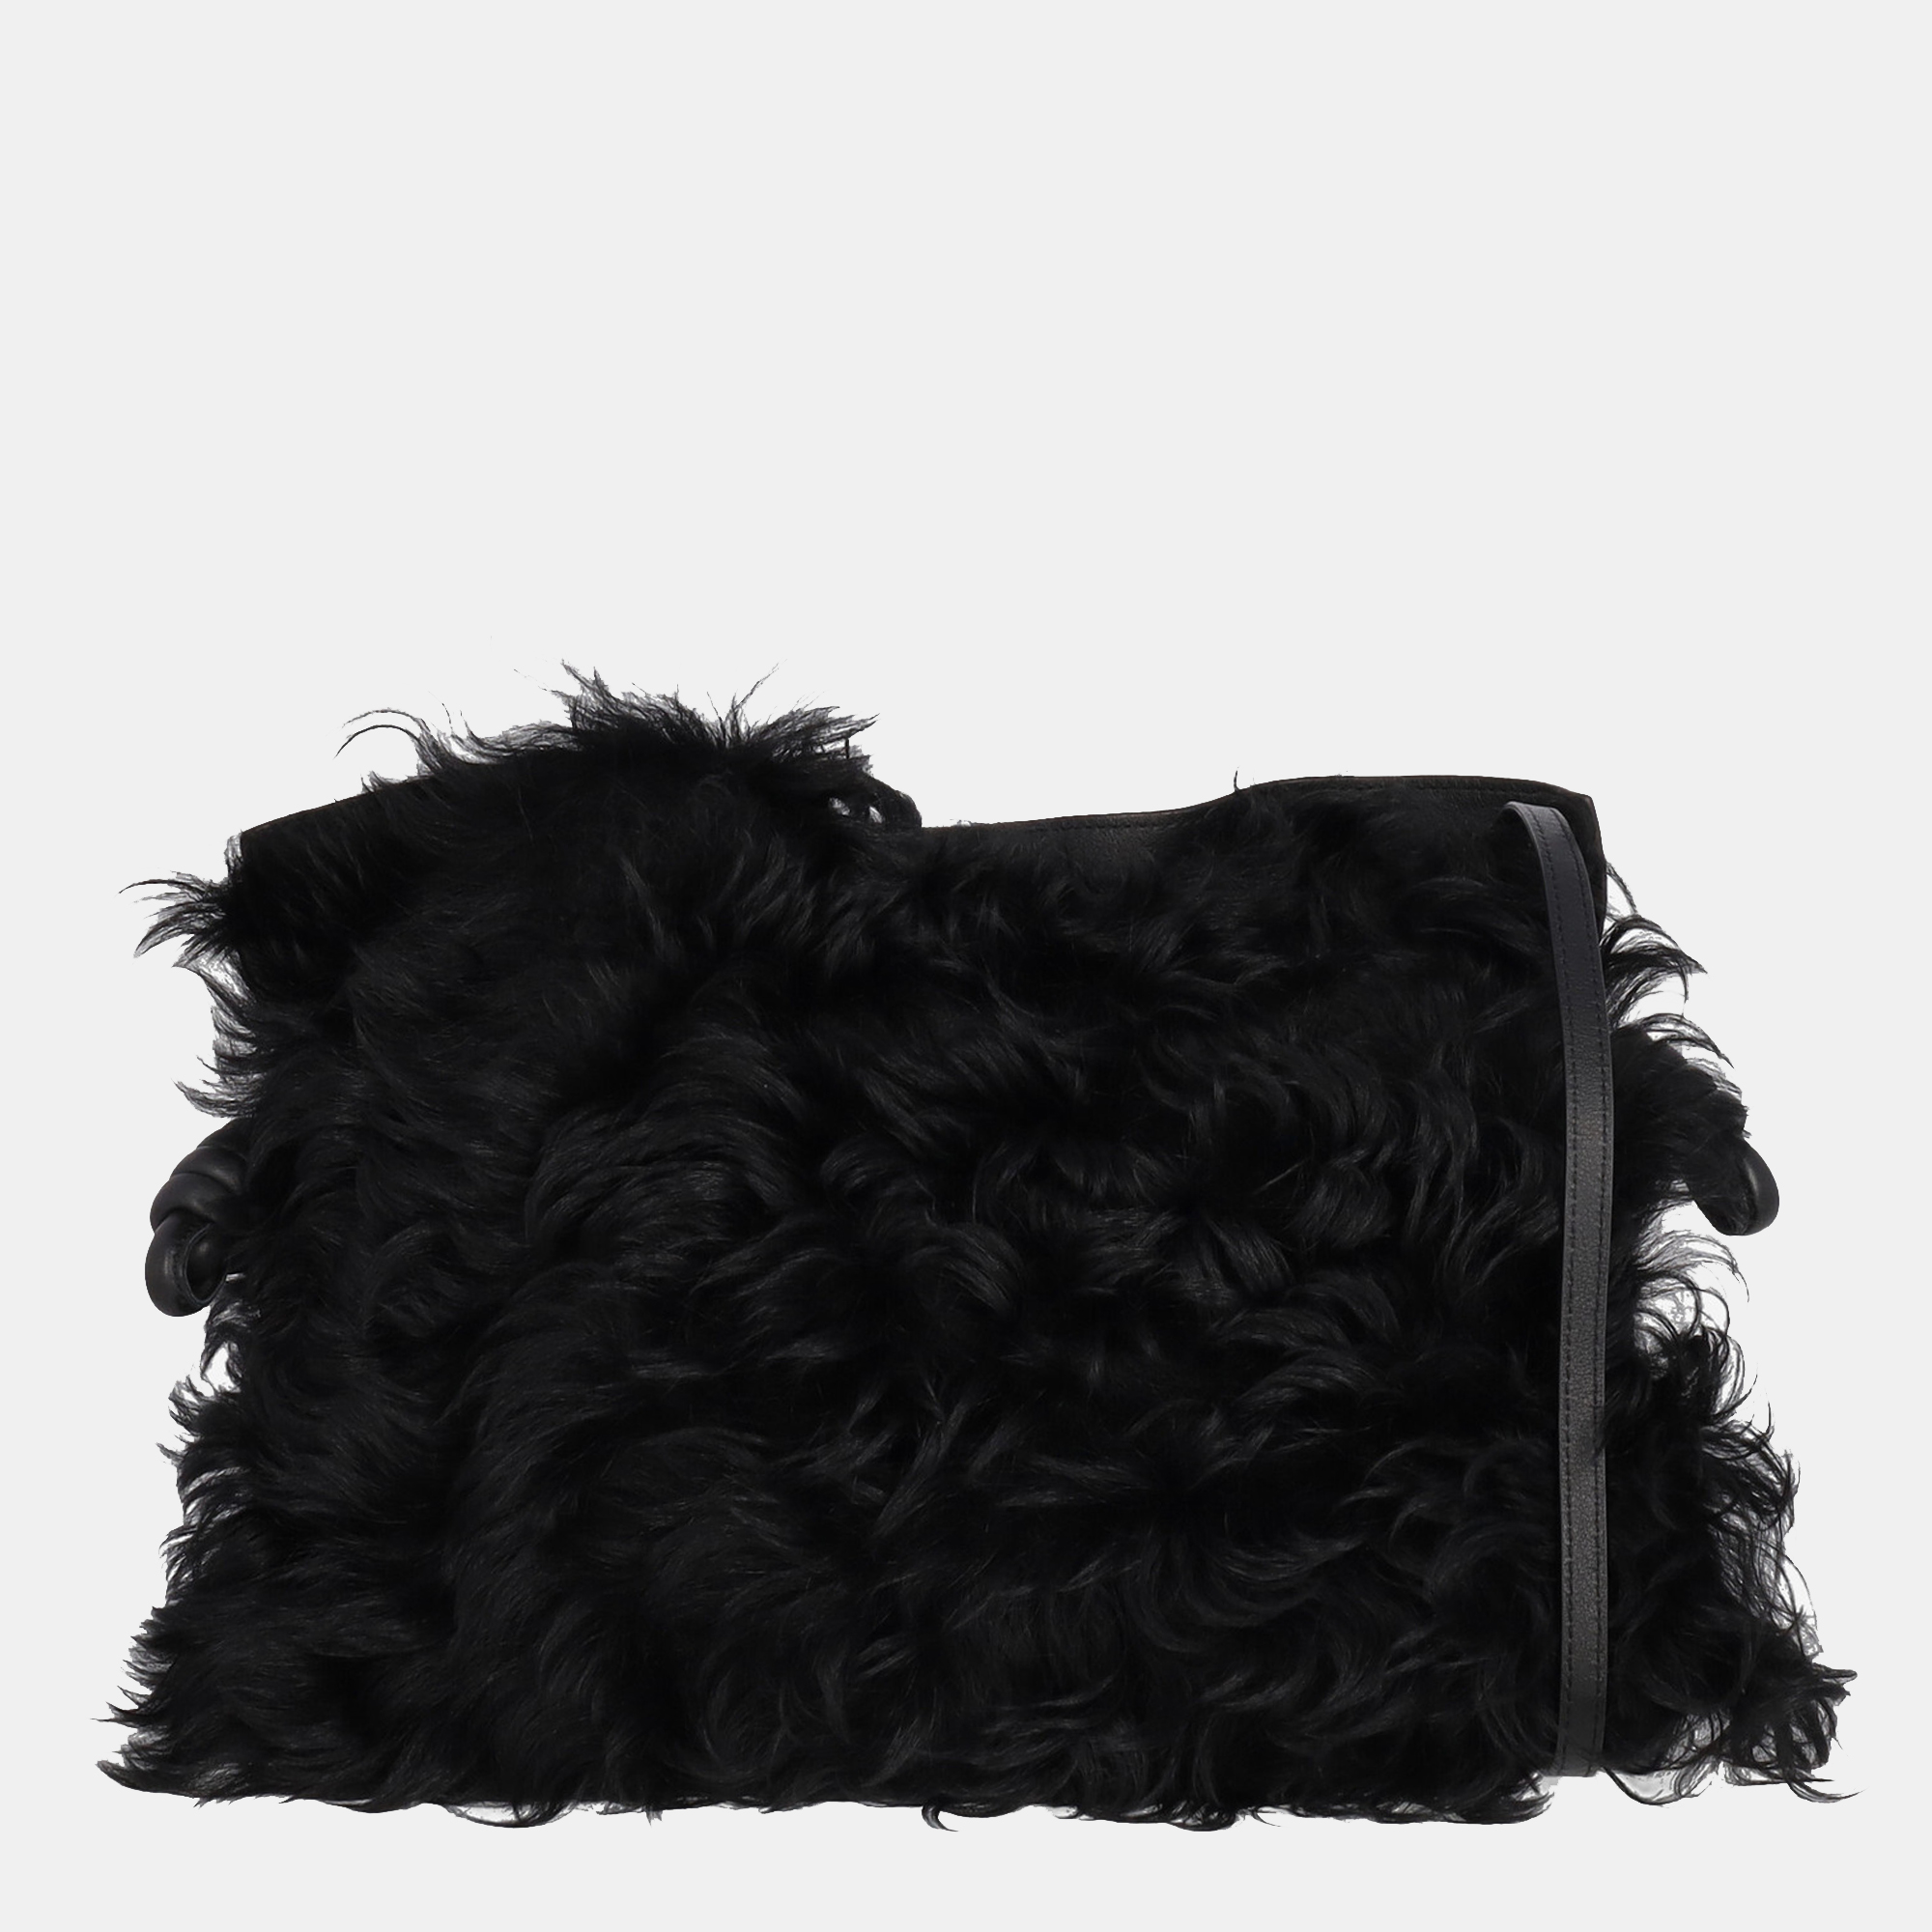 Loewe Flamenco -  Women's Leather Shoulder Bag - Black - One Size